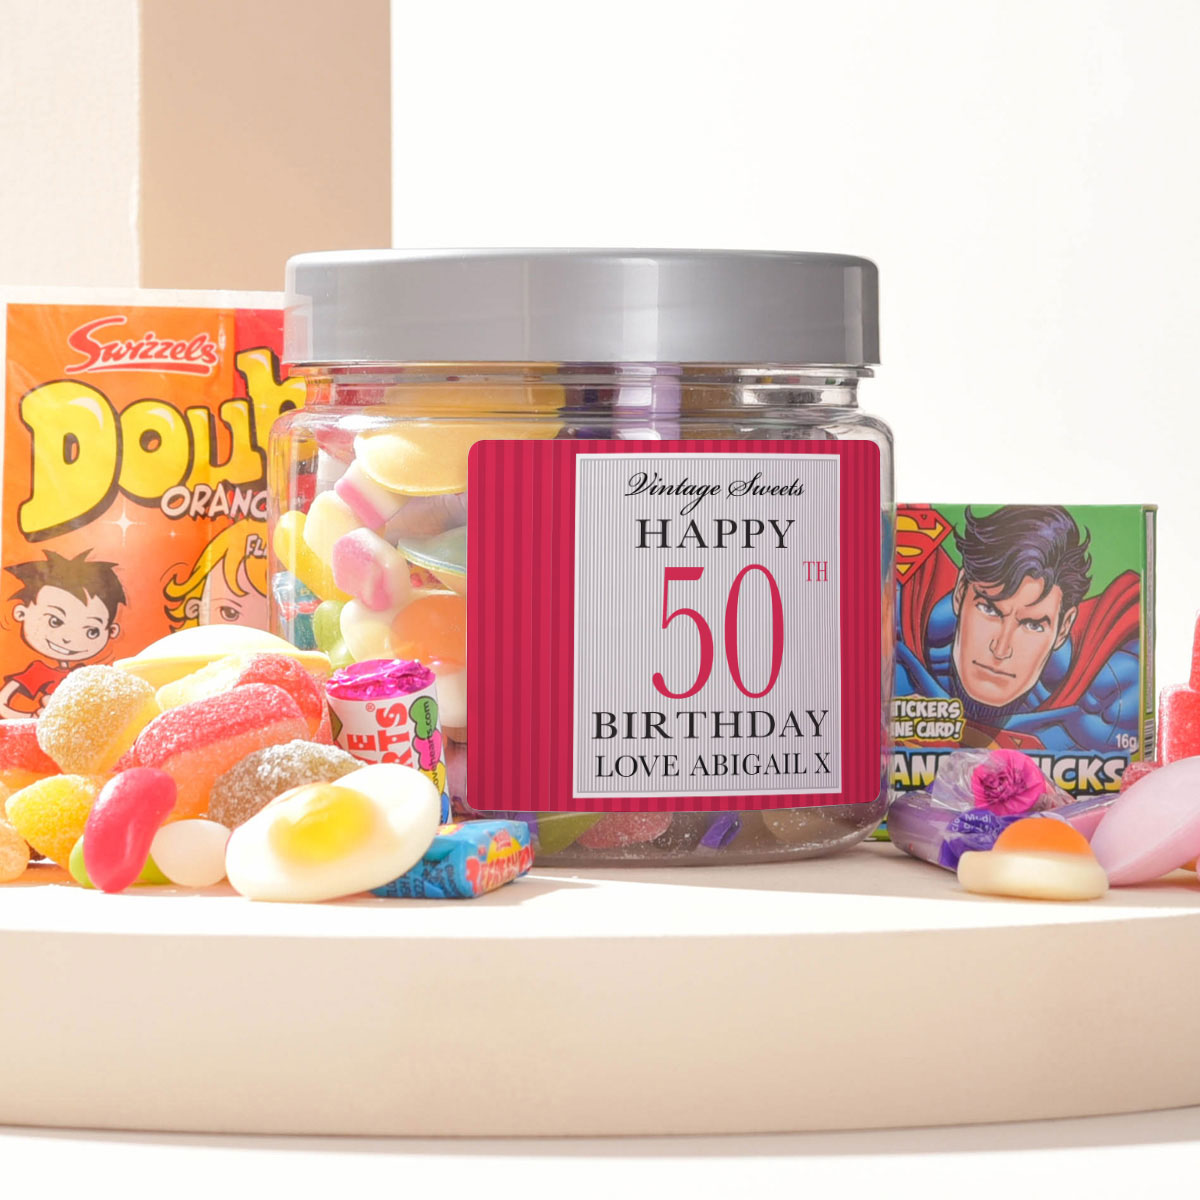 Personalised Retro Sweet Jar - Happy 50th Birthday